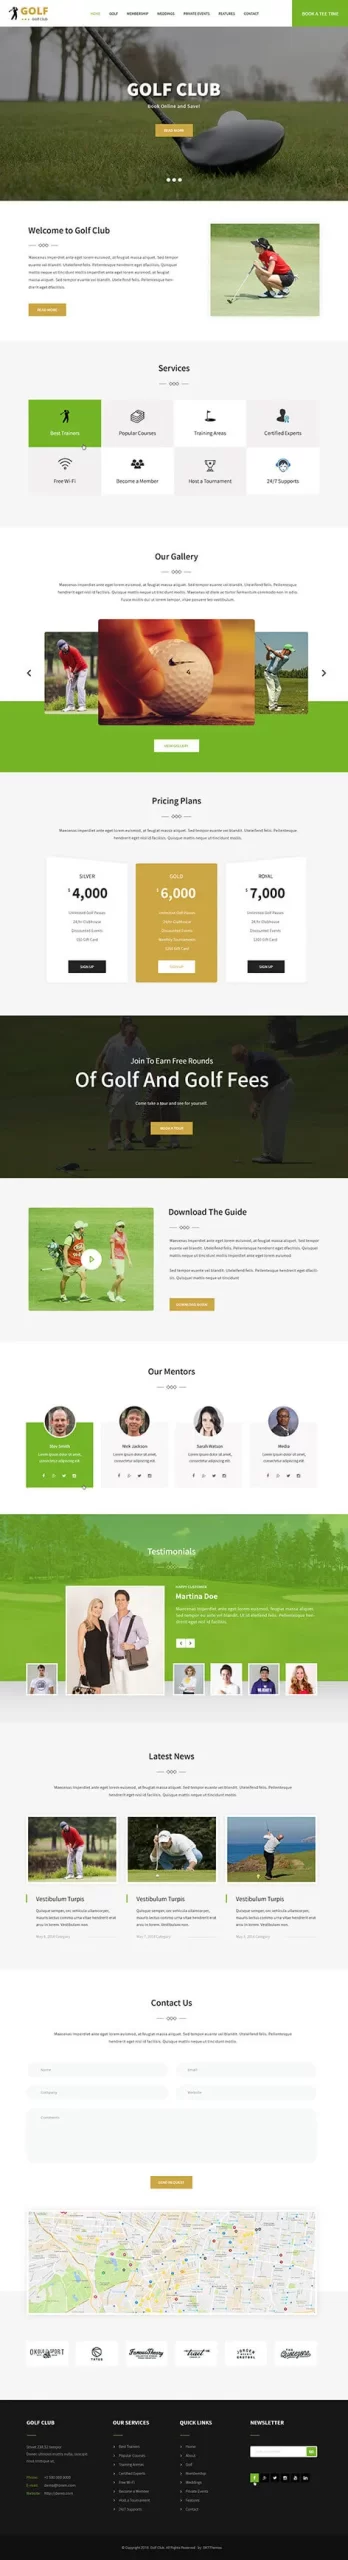 sports team WordPress theme